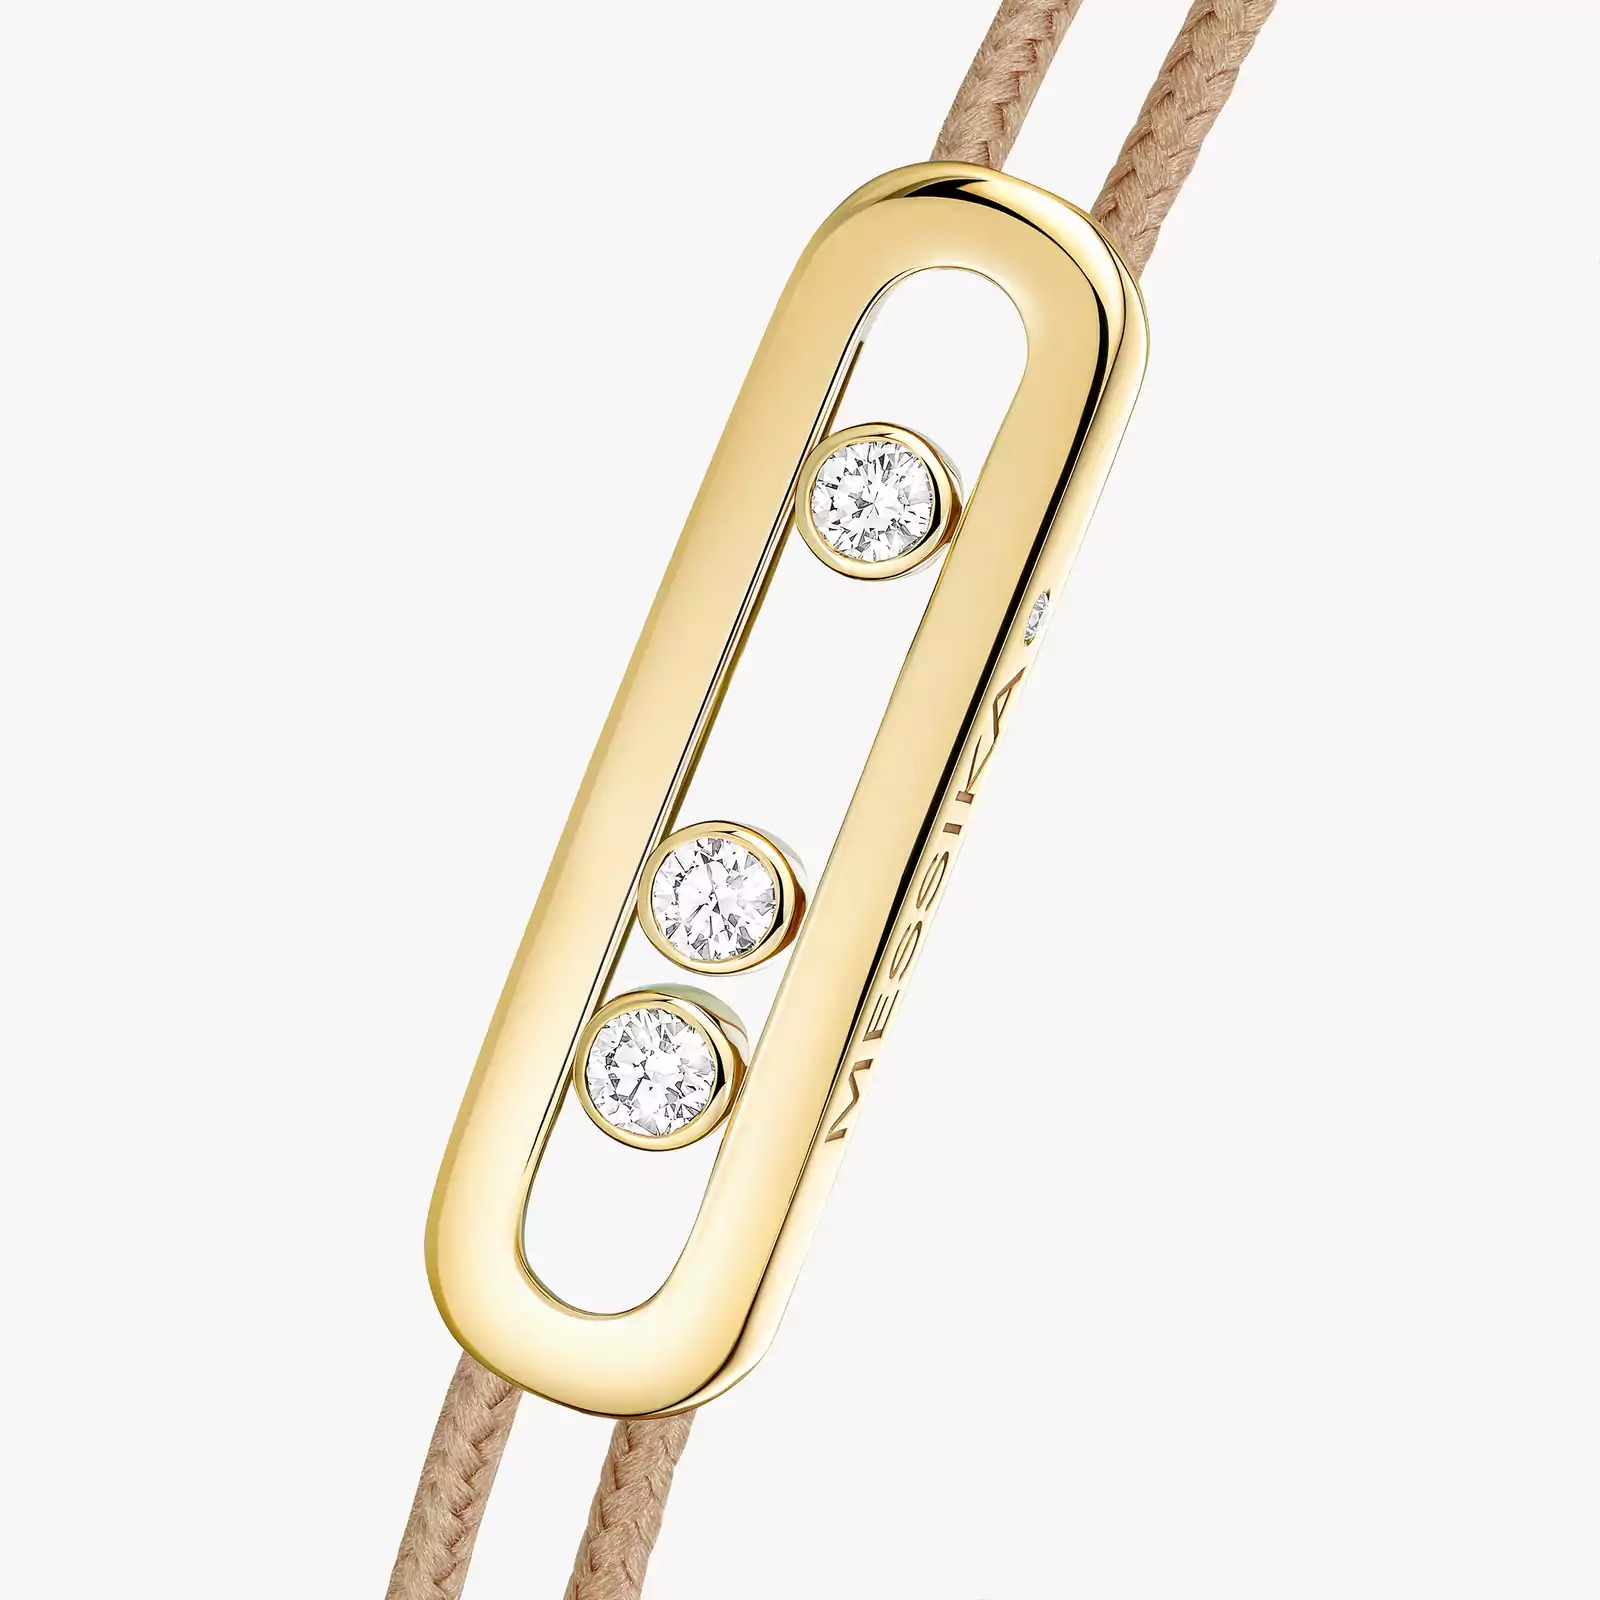 Bracelet For Her Yellow Gold Diamond Messika CARE(S) Beige Cord Bracelet 14099-YG